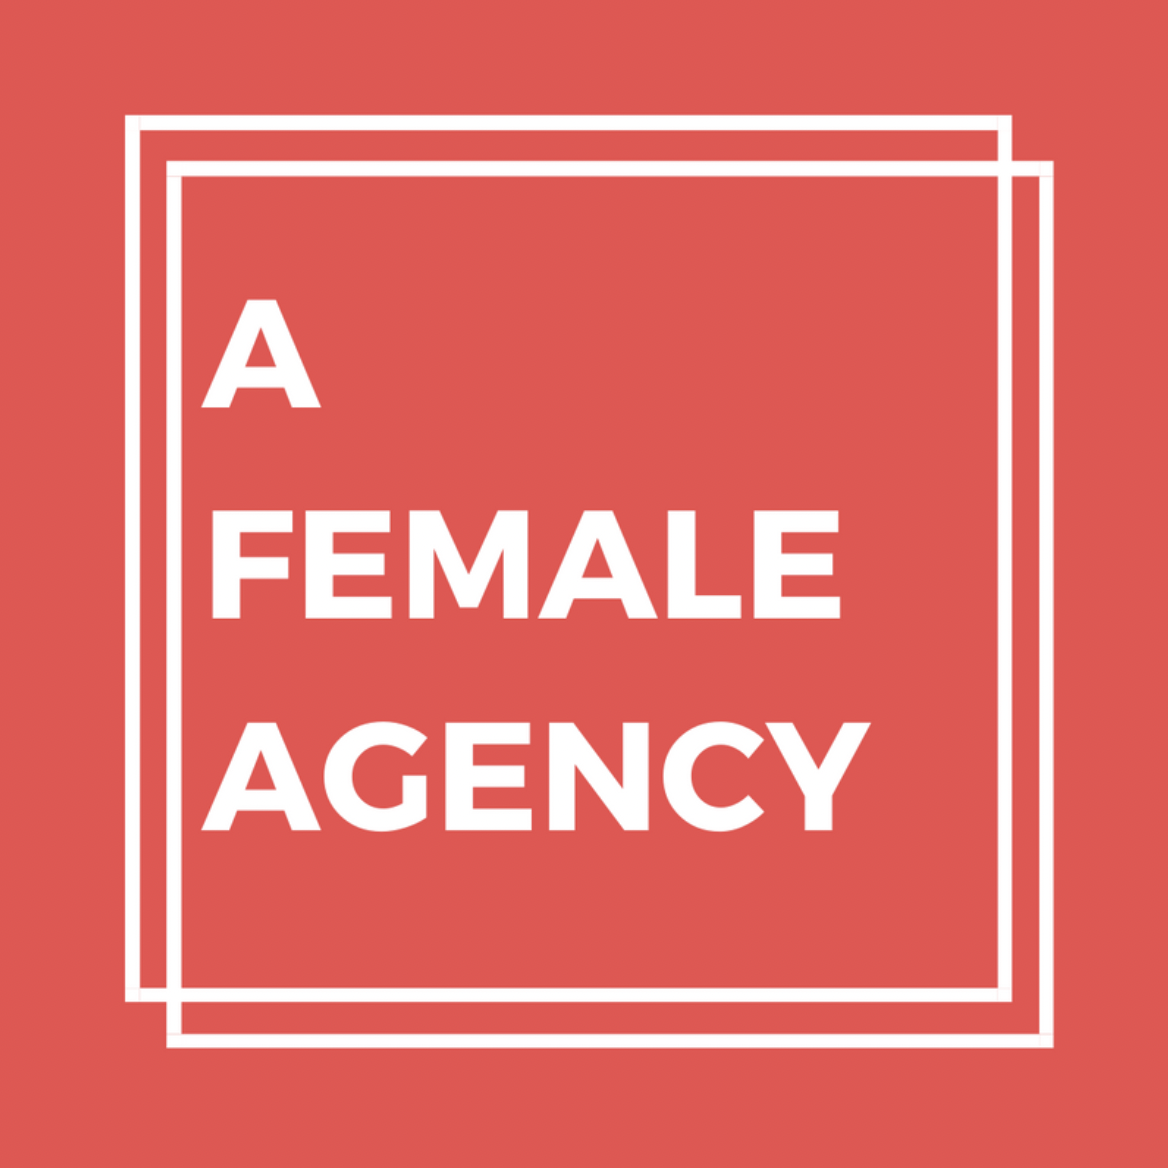 A Female Agency